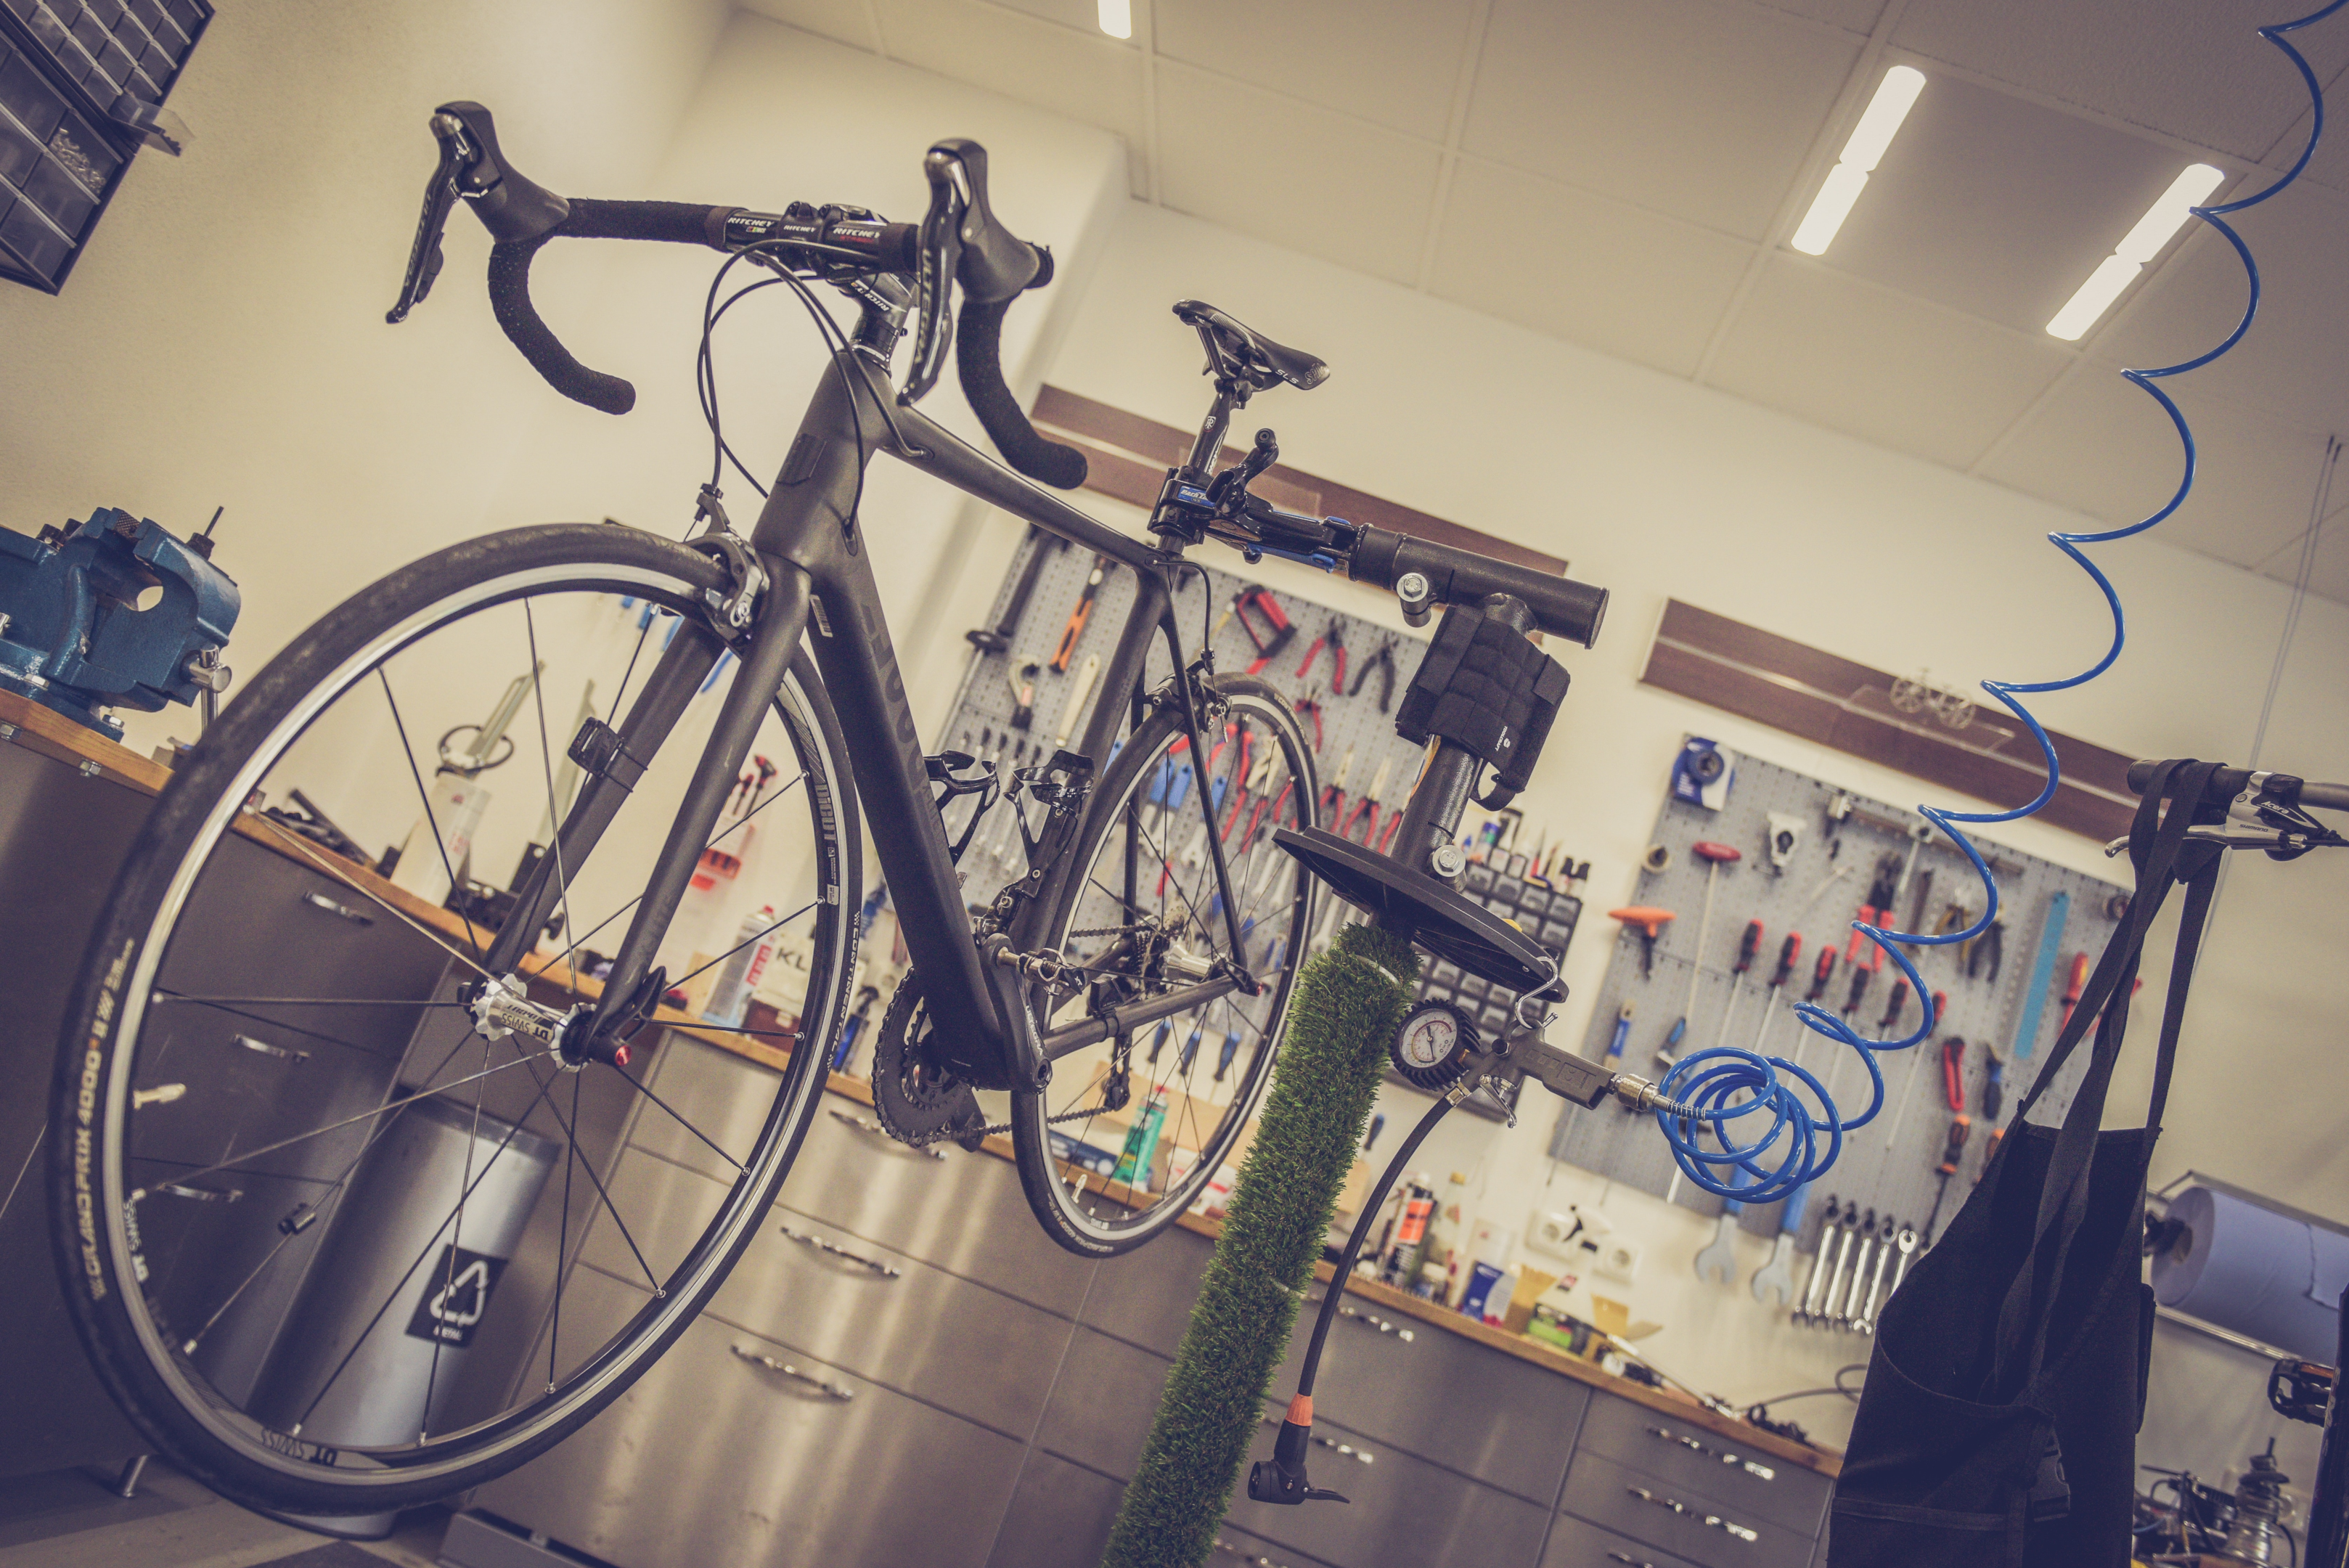 Bicicleta com bar end em oficina de bike. Foto de Alexander Dummer, Pexels.